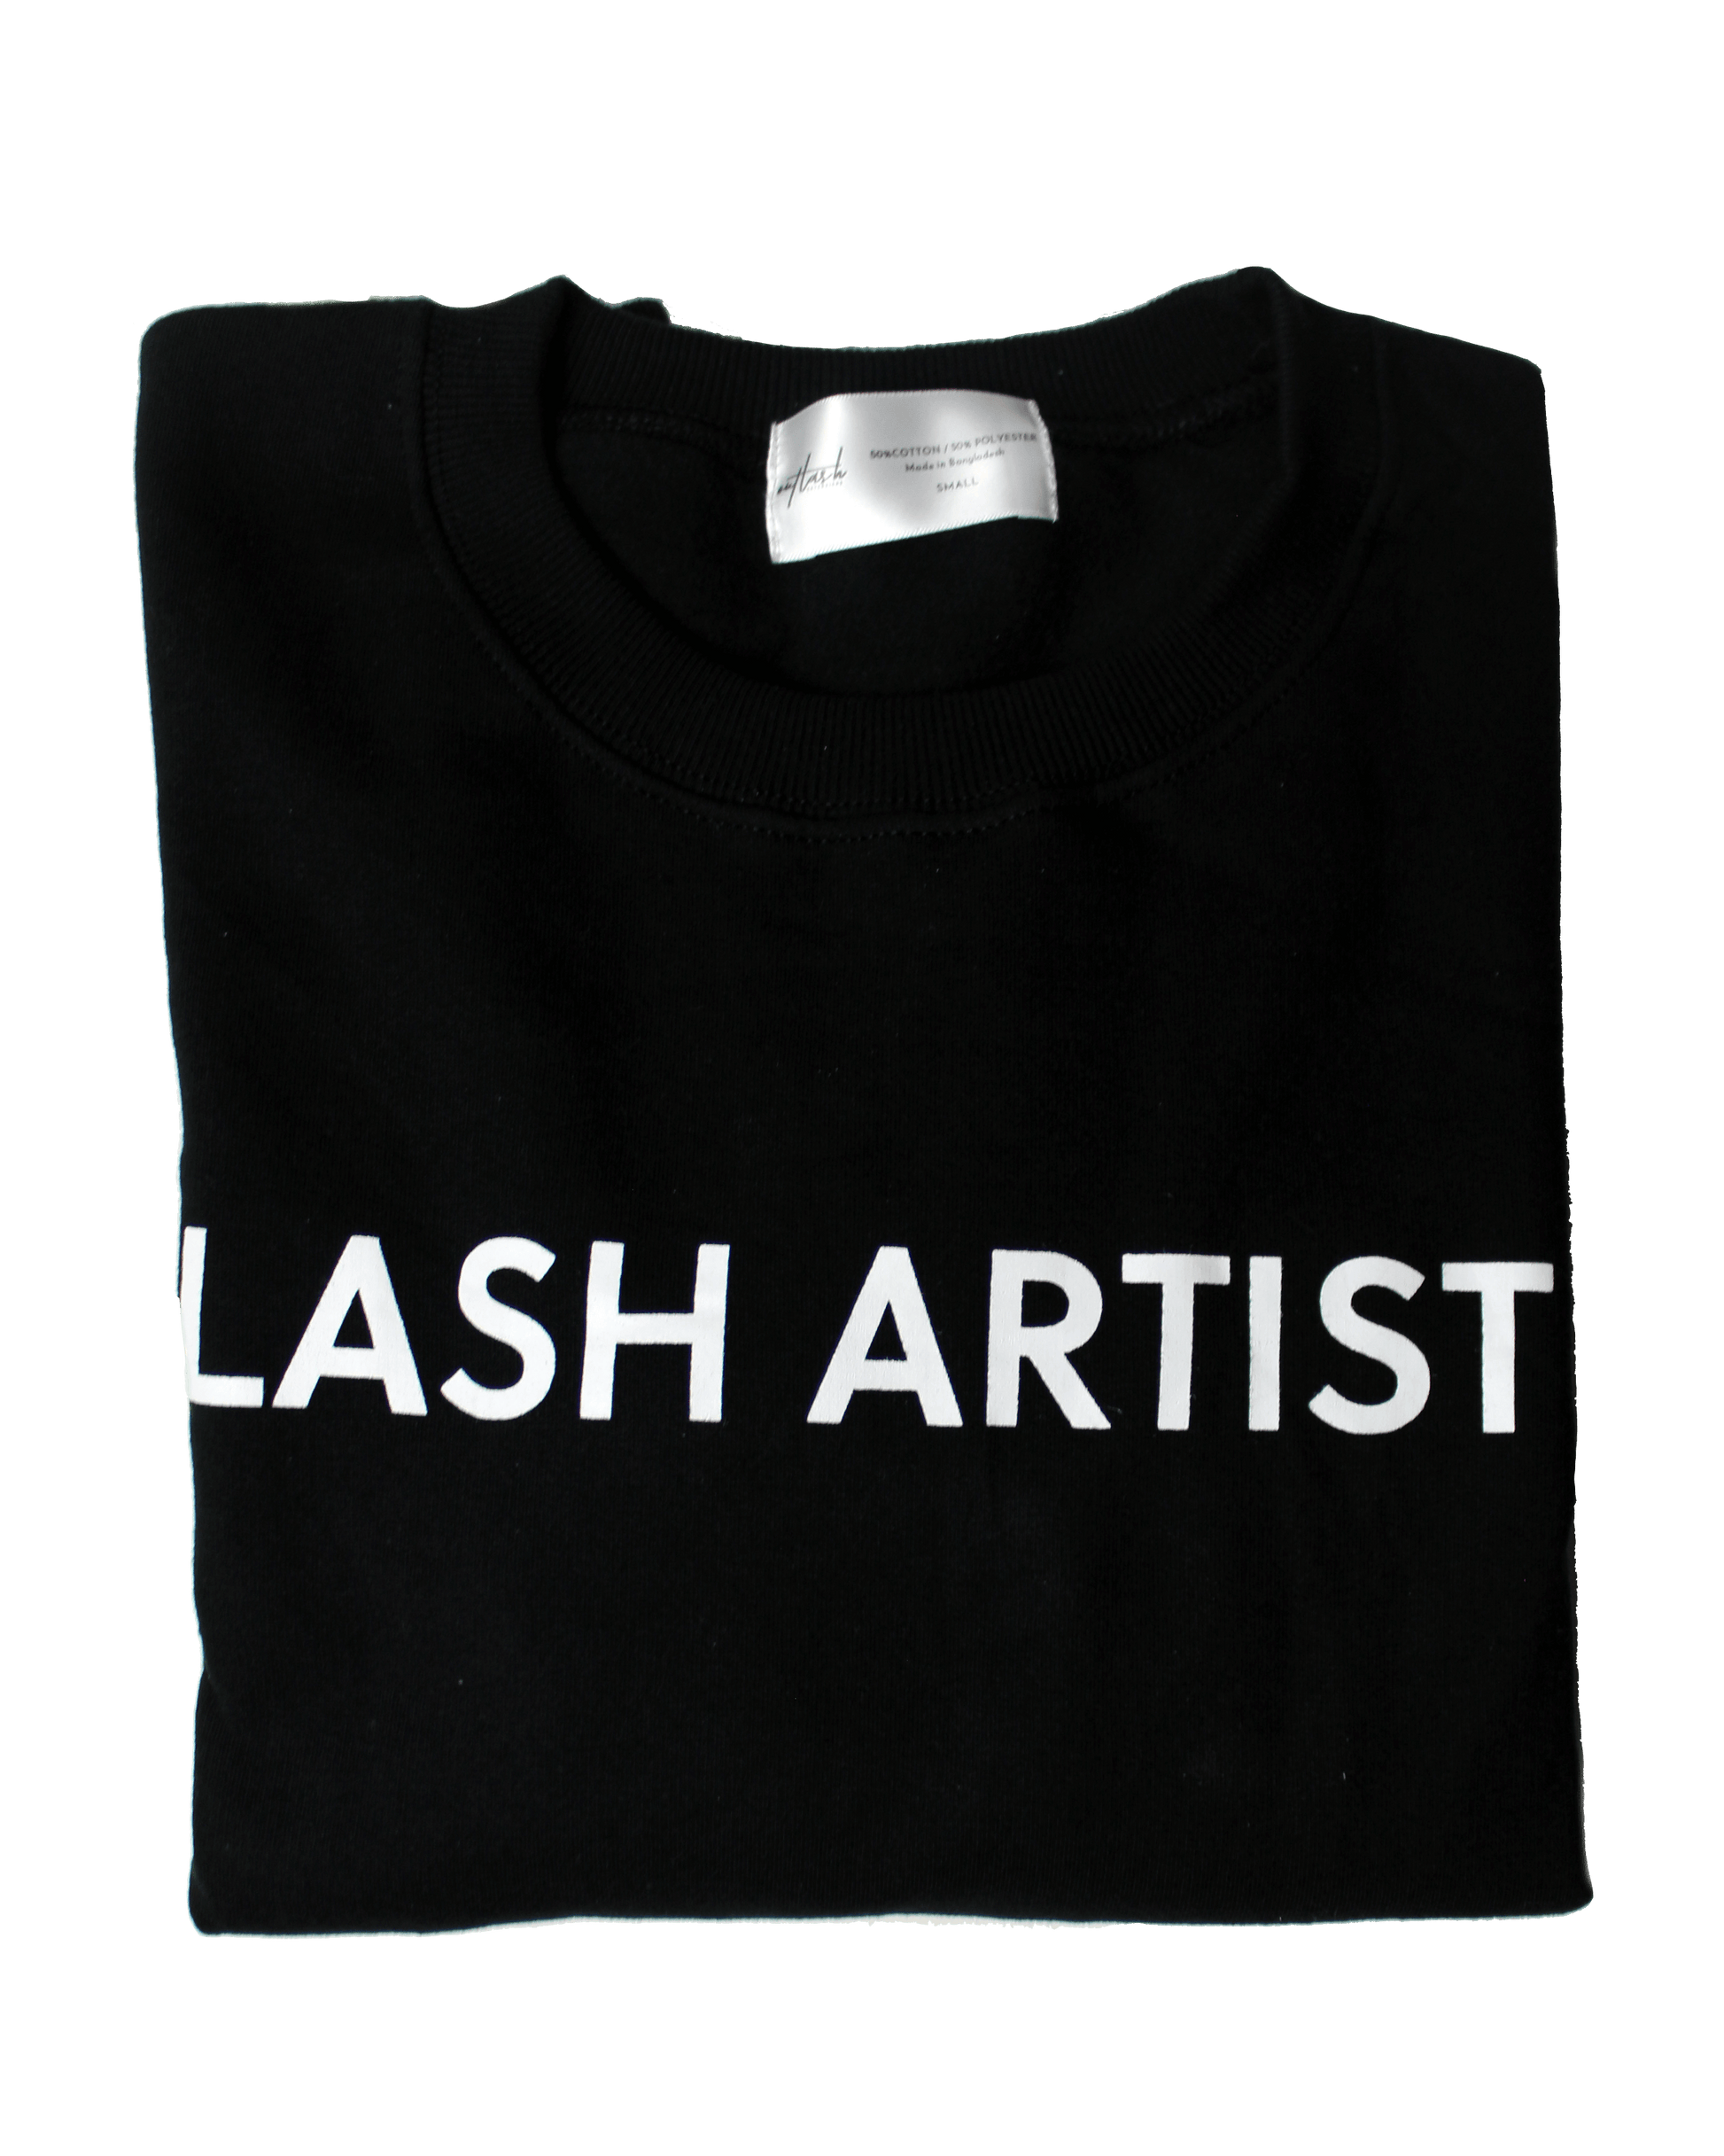 Lash Artist Sweatshirt | OutLash Extensions Pro Canada